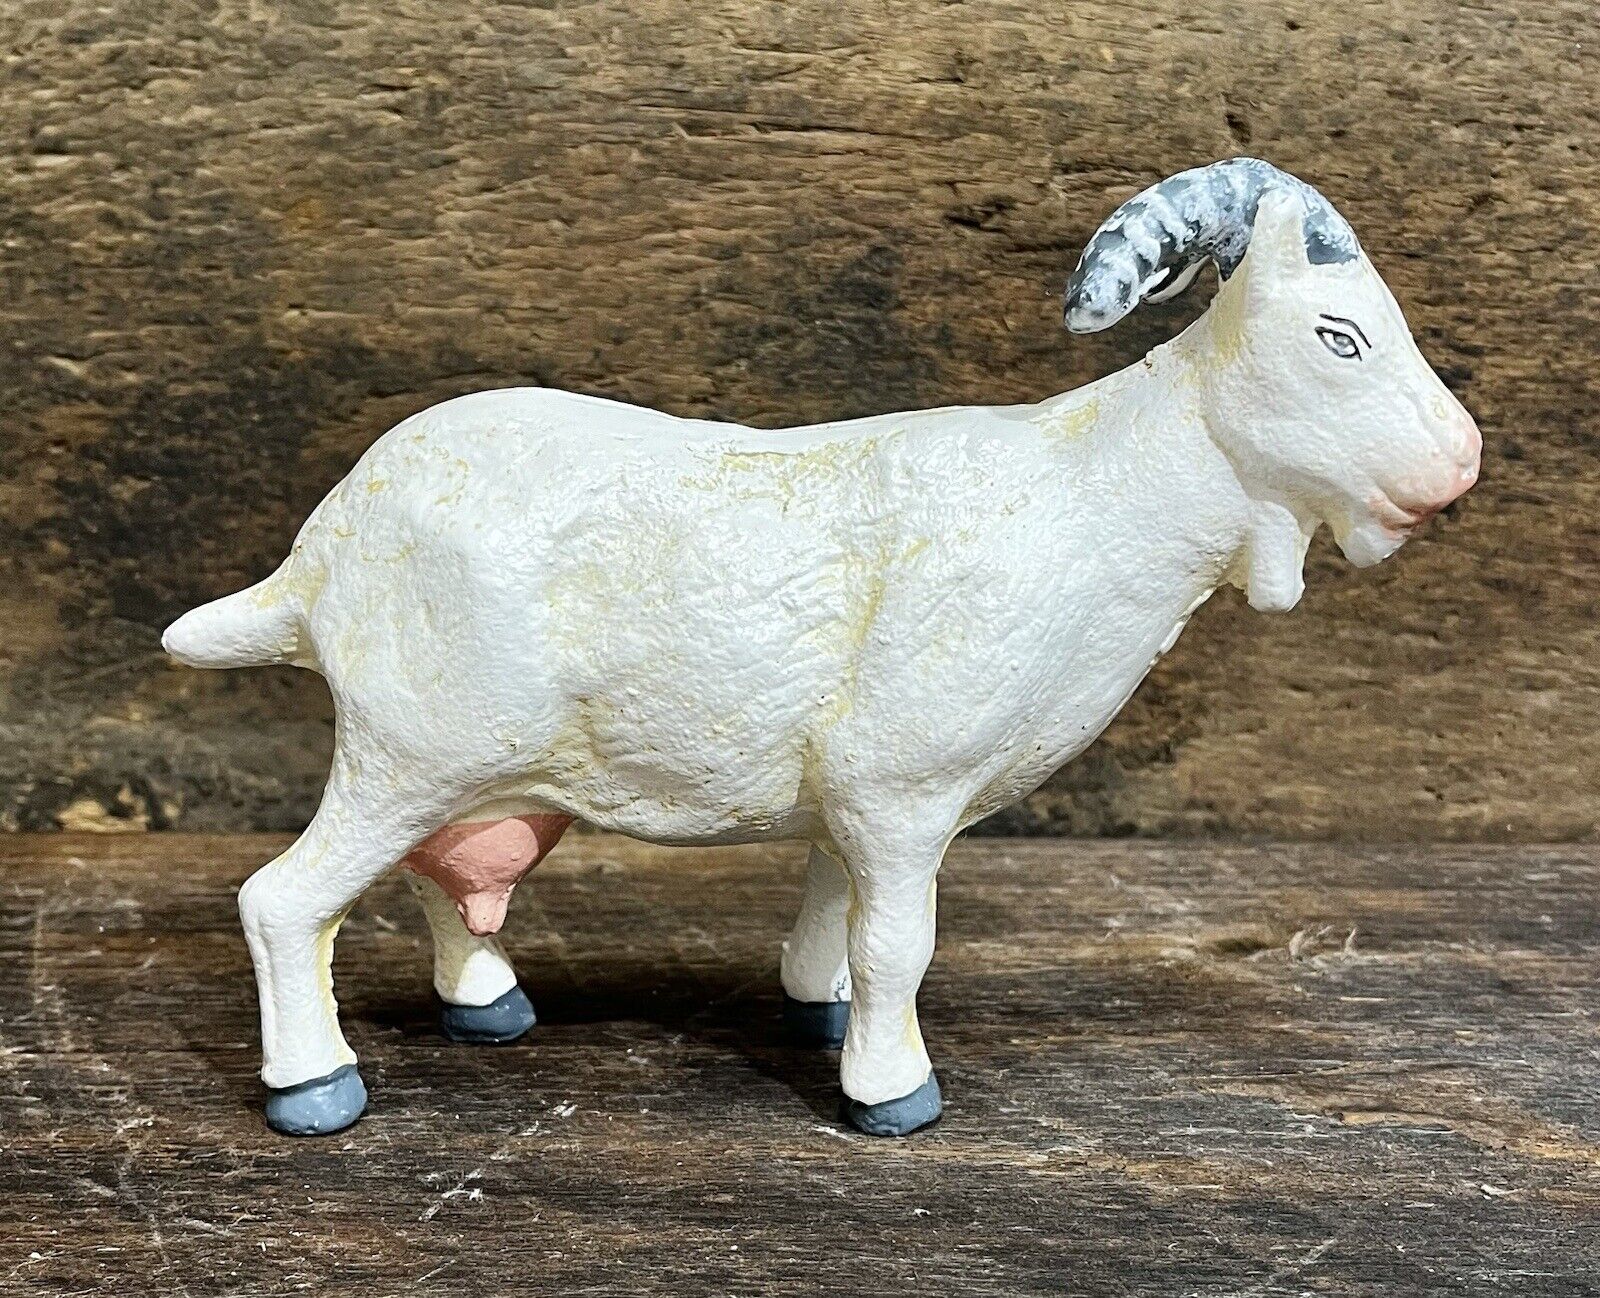 White Goat with Horns, USNA NAVY MASCOT, Cast Iron Figurine, 6” x 8”